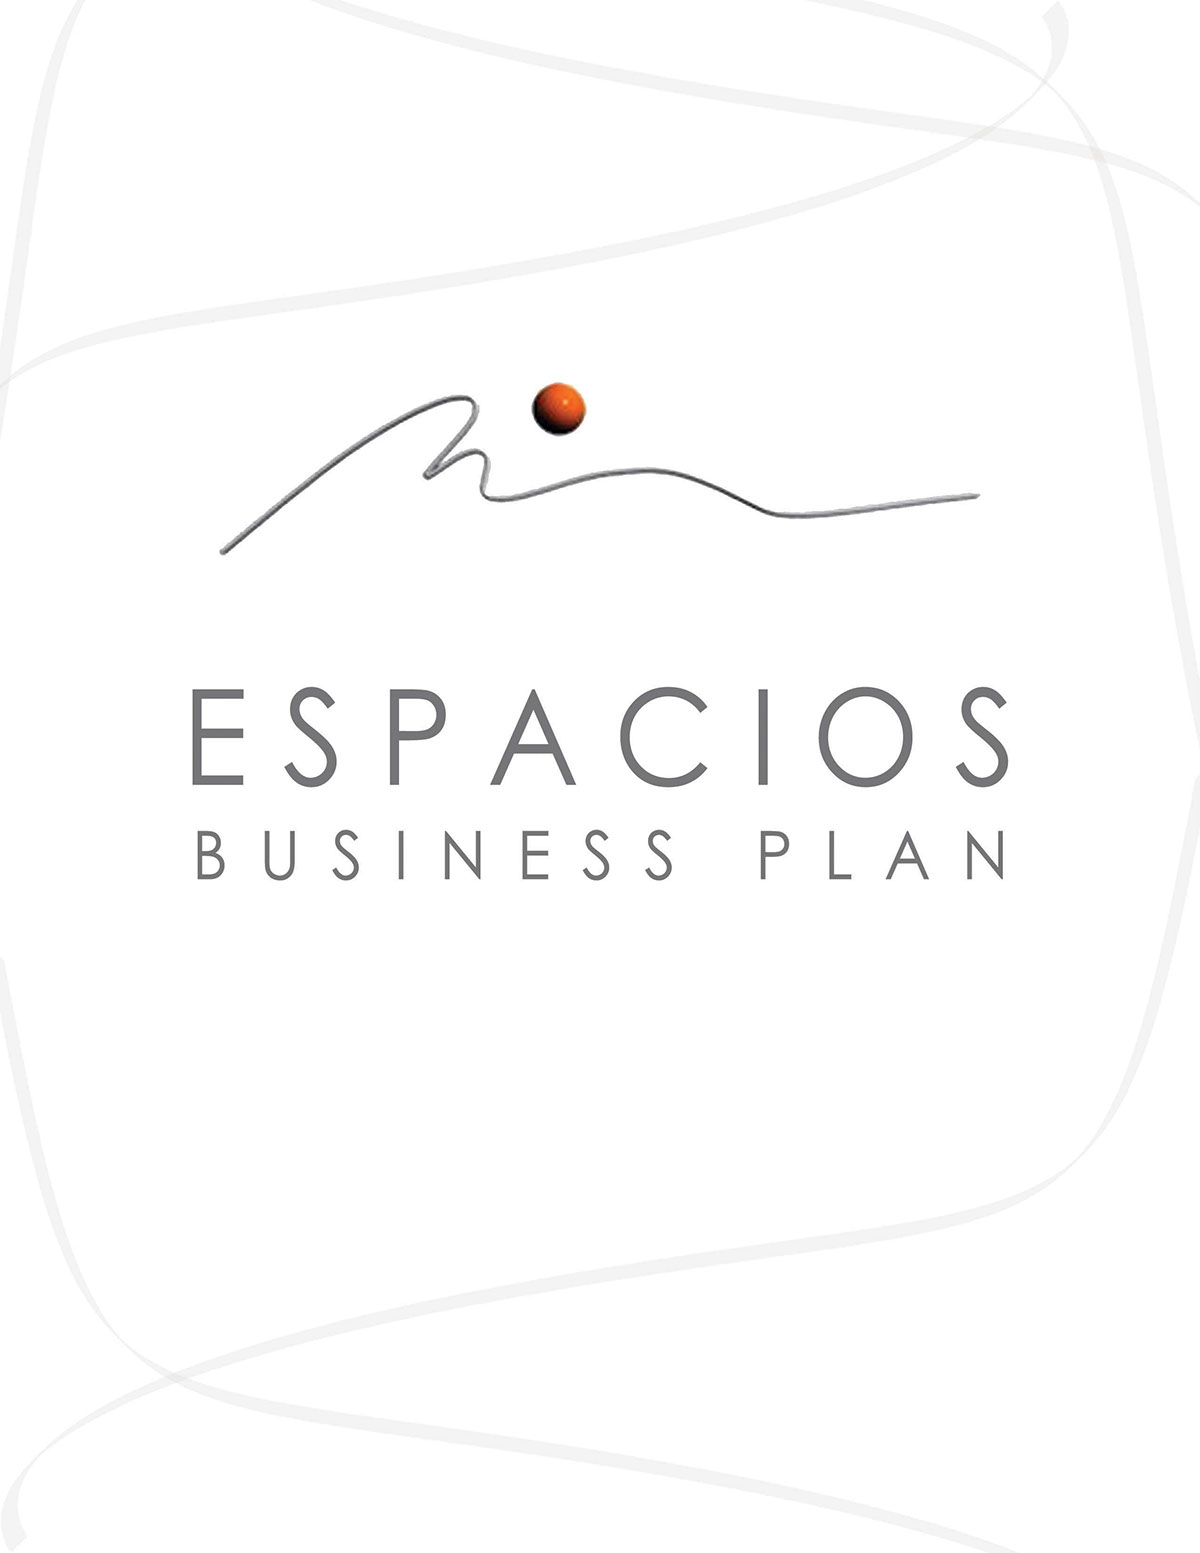 espacios julio yanes Business plan business writing marketing plan marketing strategy business entrepreneur